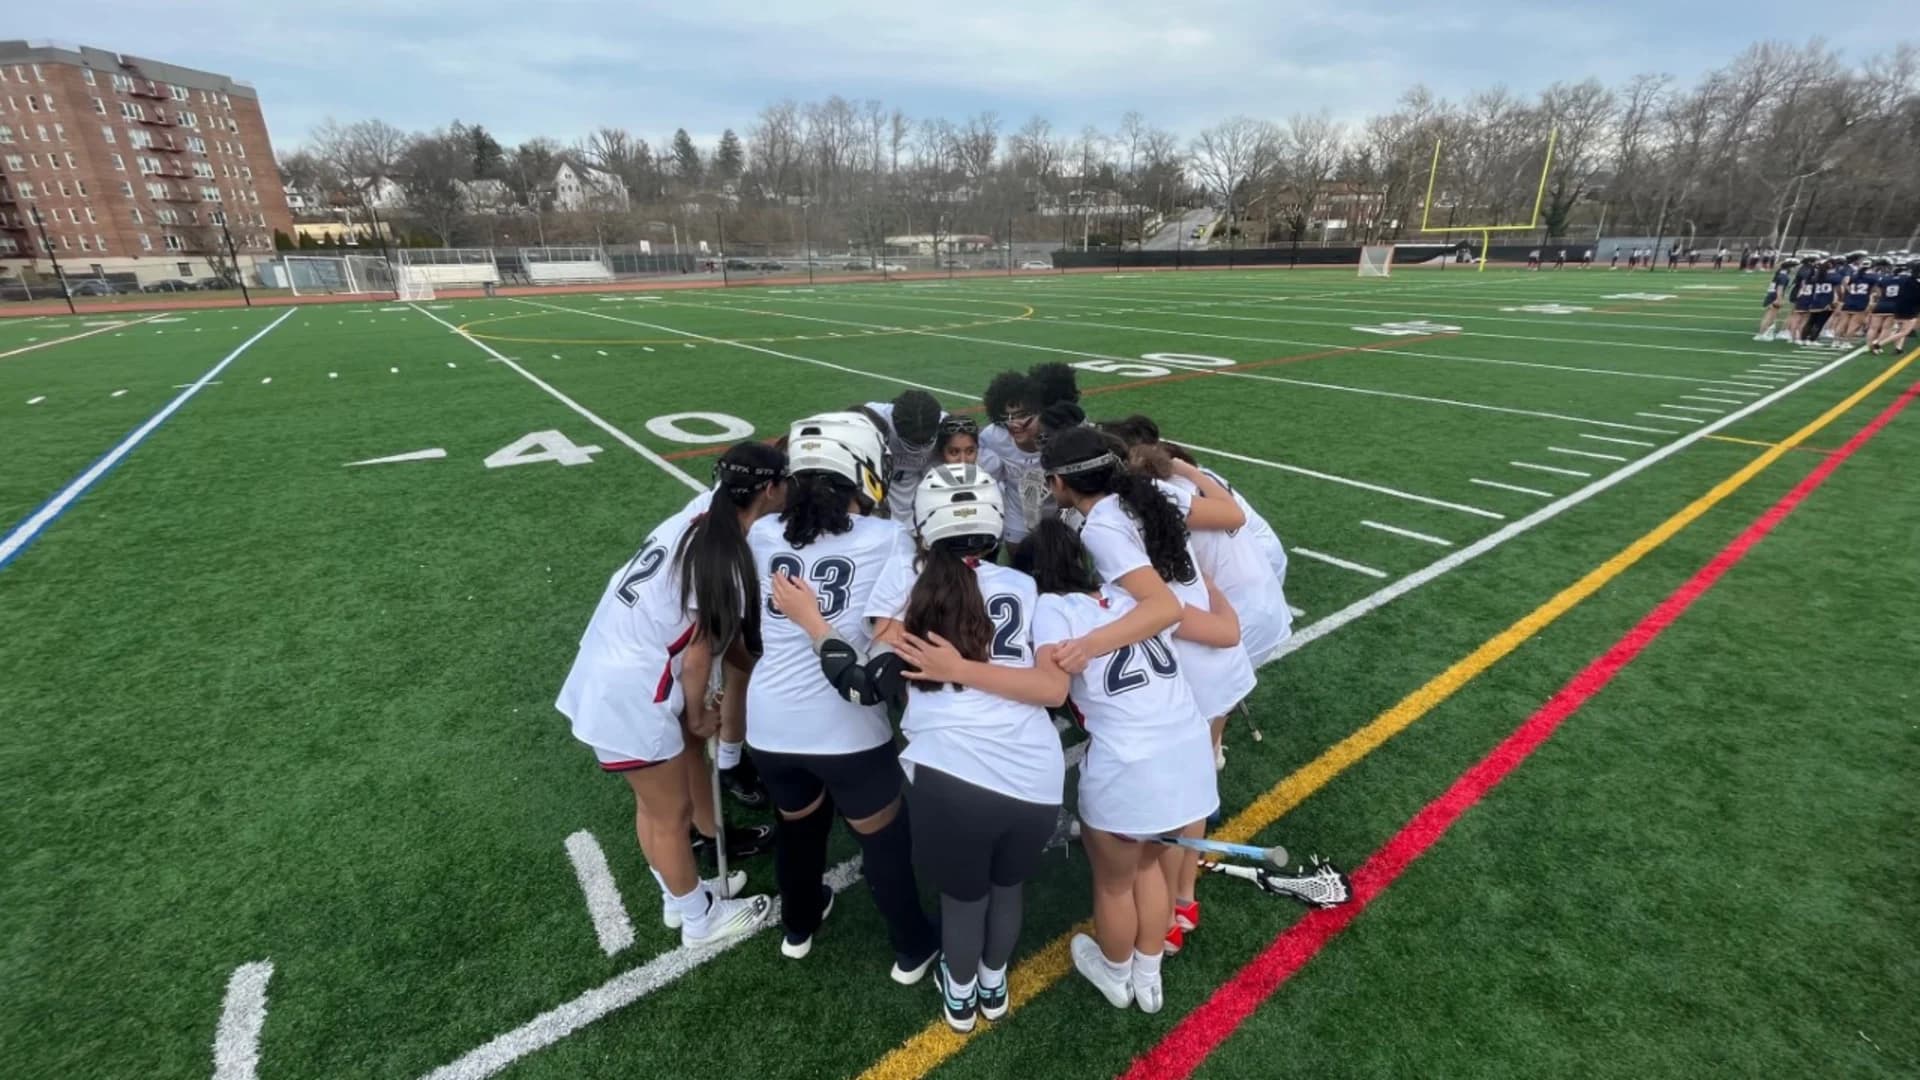 Yonkers Public Schools' girls lacrosse team wins 1st game in 15 years